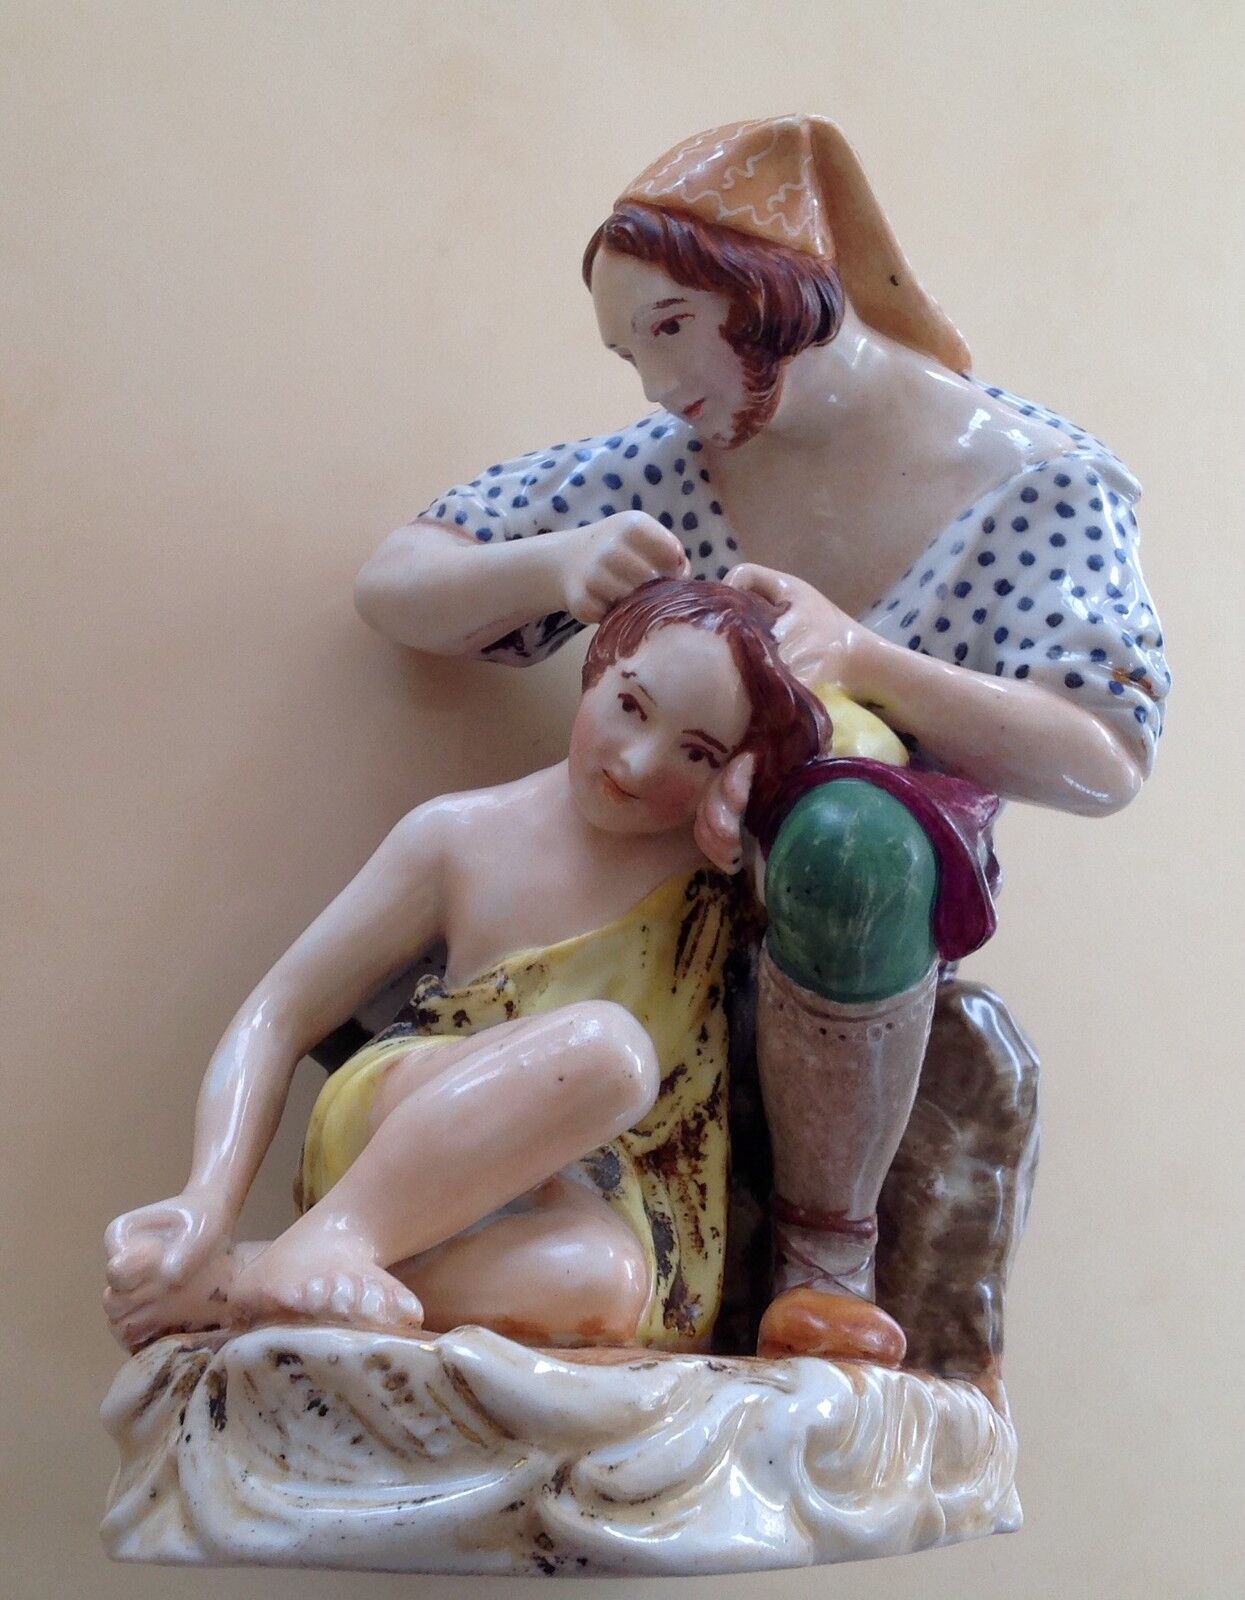 Antique Collectable Russian Porcelain Figurine Gardner 